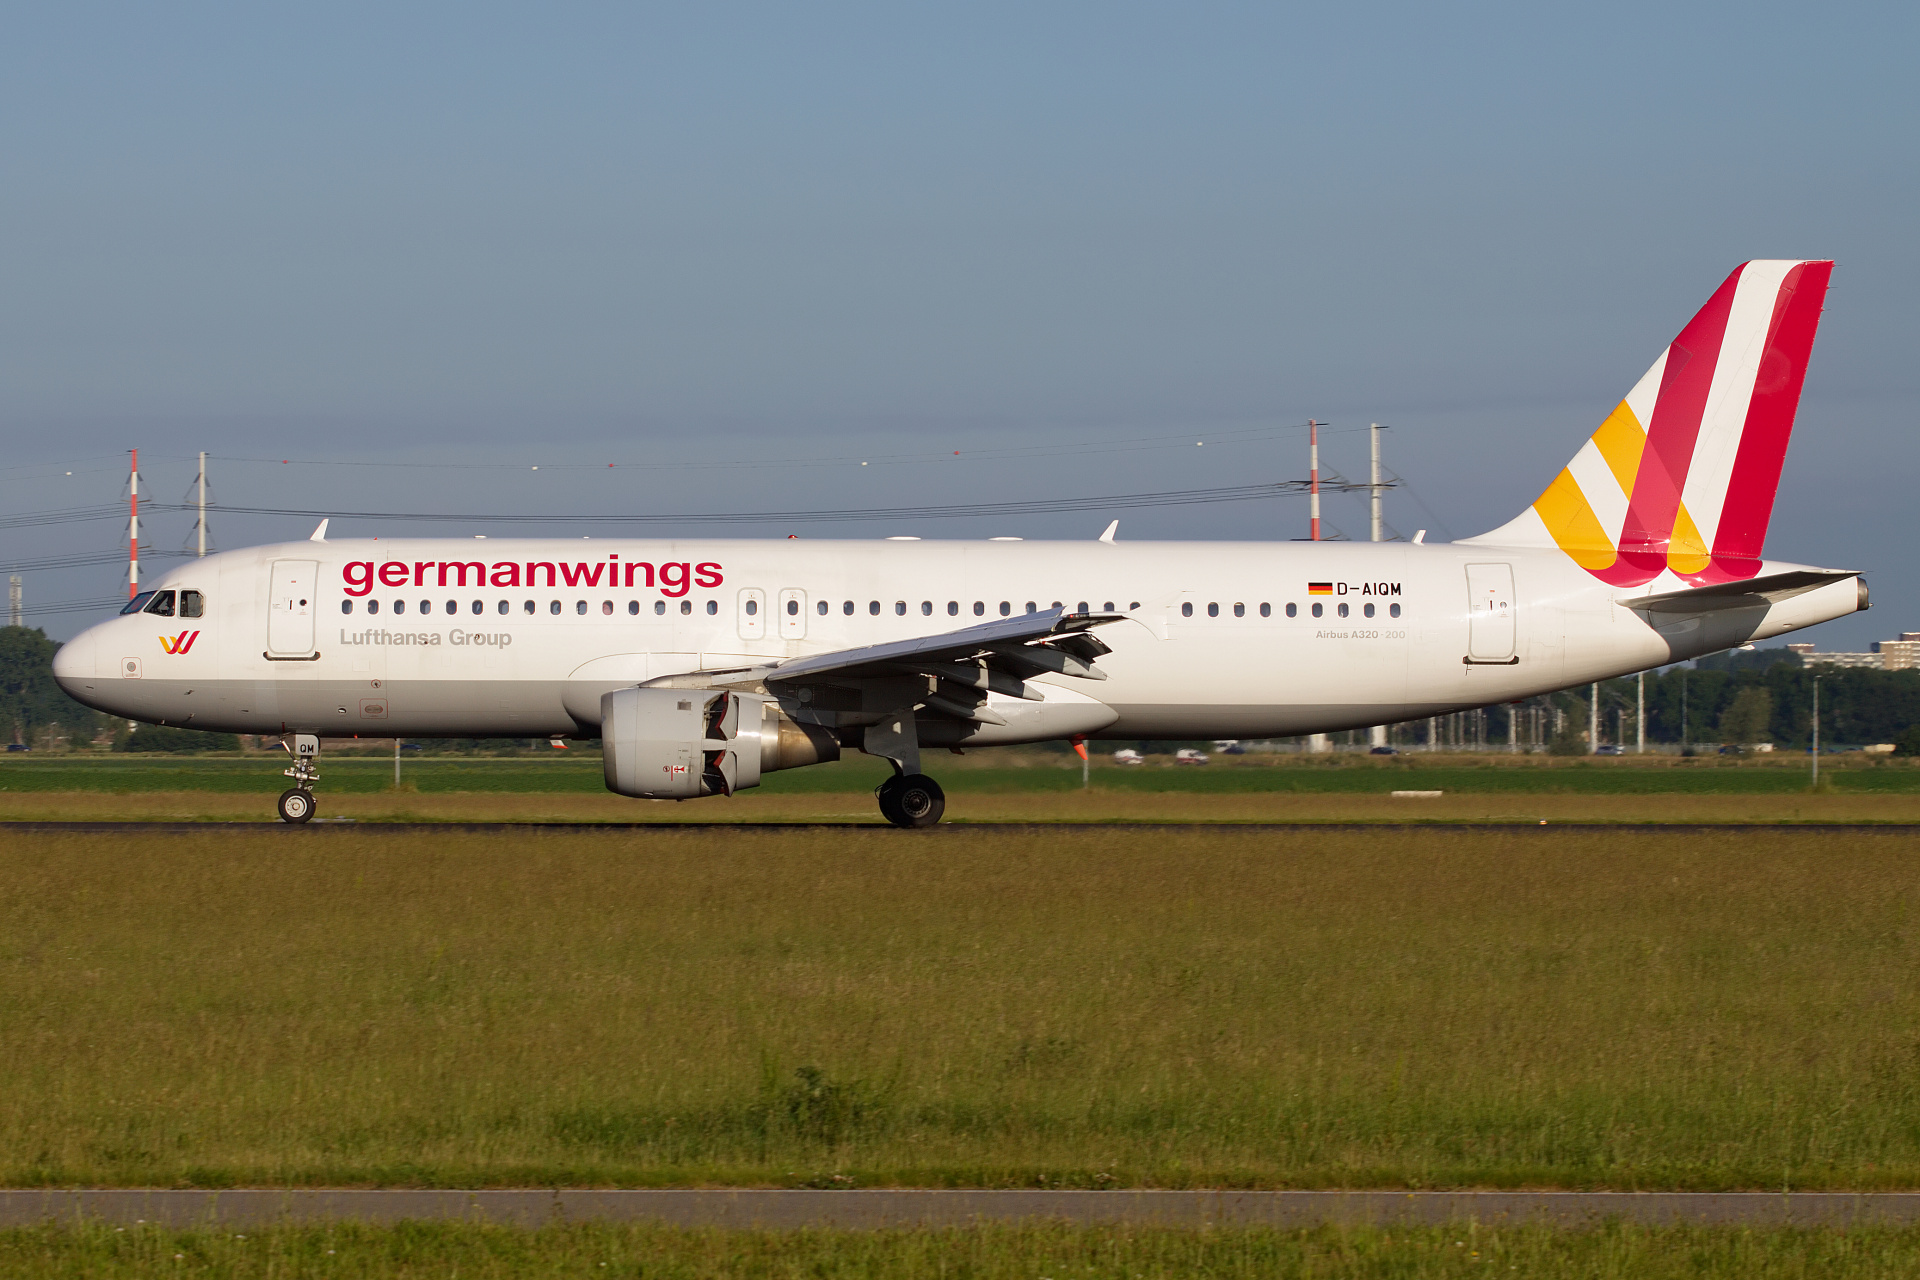 D-AIQM, Germanwings (Aircraft » Schiphol Spotting » Airbus A320-200)